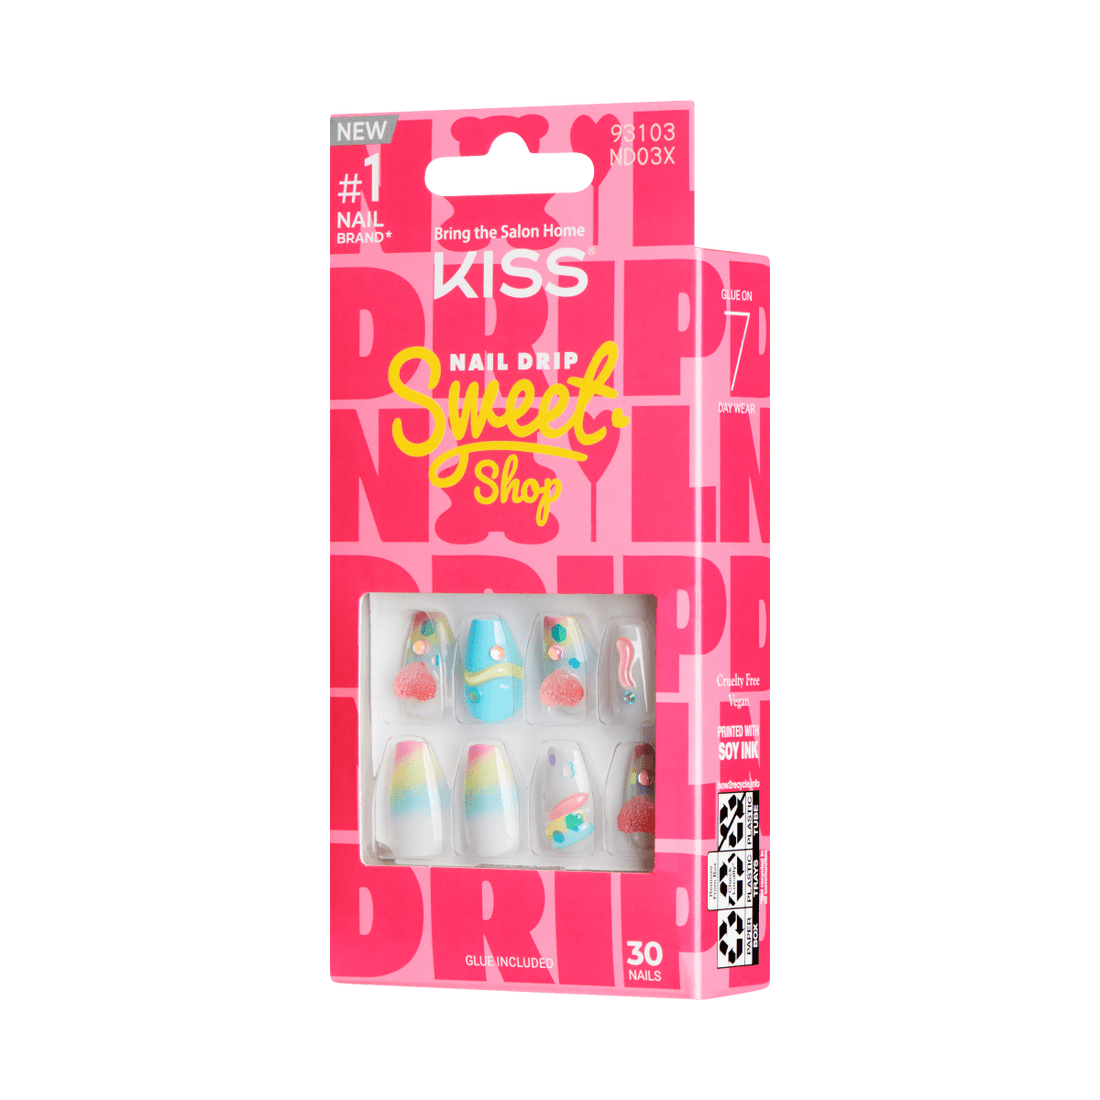 KISS Nail Drip ‘Sweet Shop’ Press-On Glue Nails – Drip Today